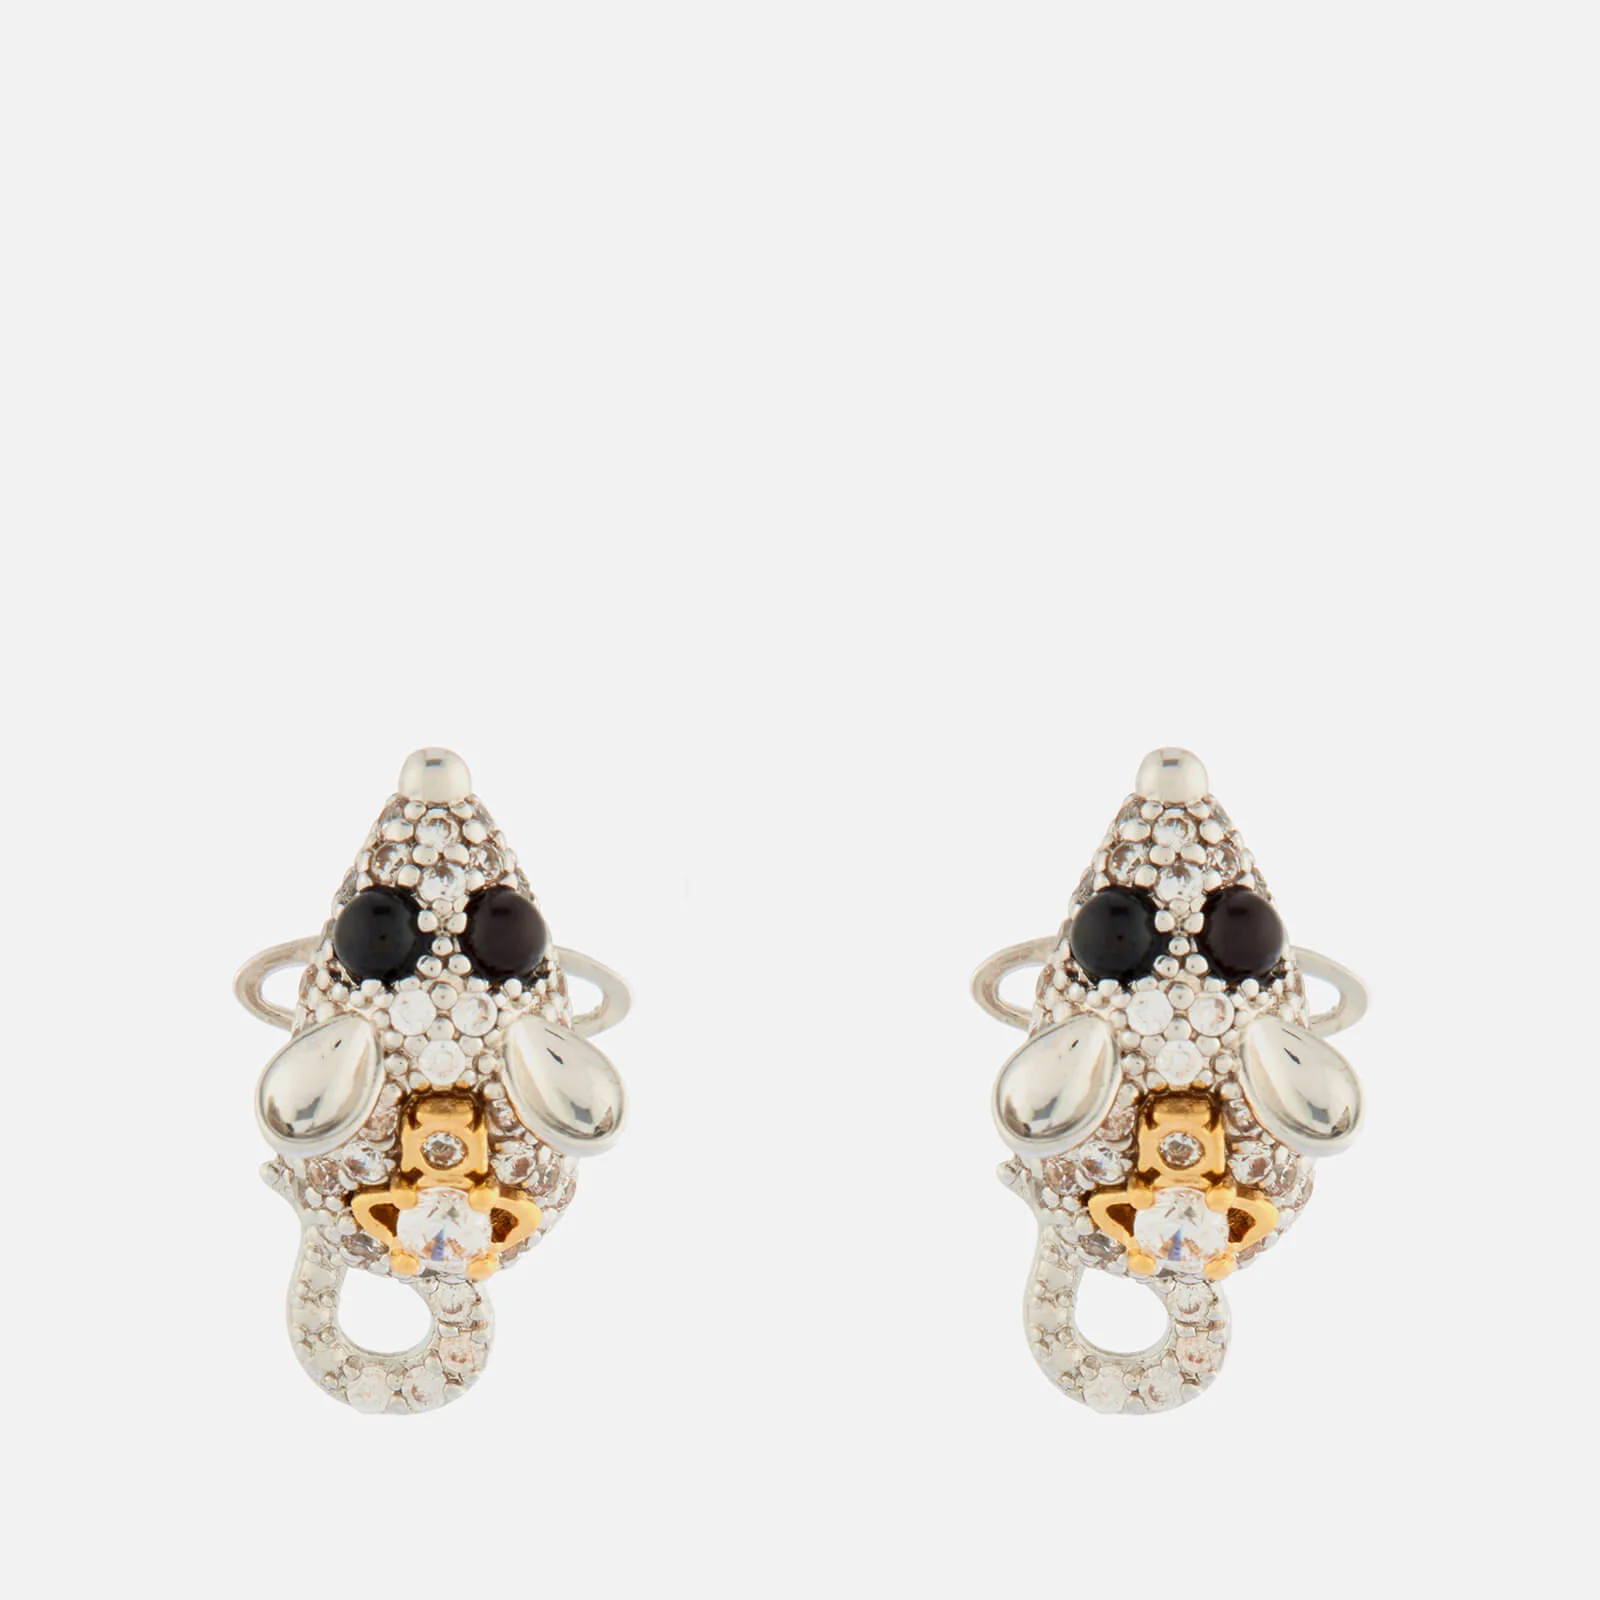 Vivienne Westwood Women's Rat Earrings - Rhodium/Gold White/Black Image 1